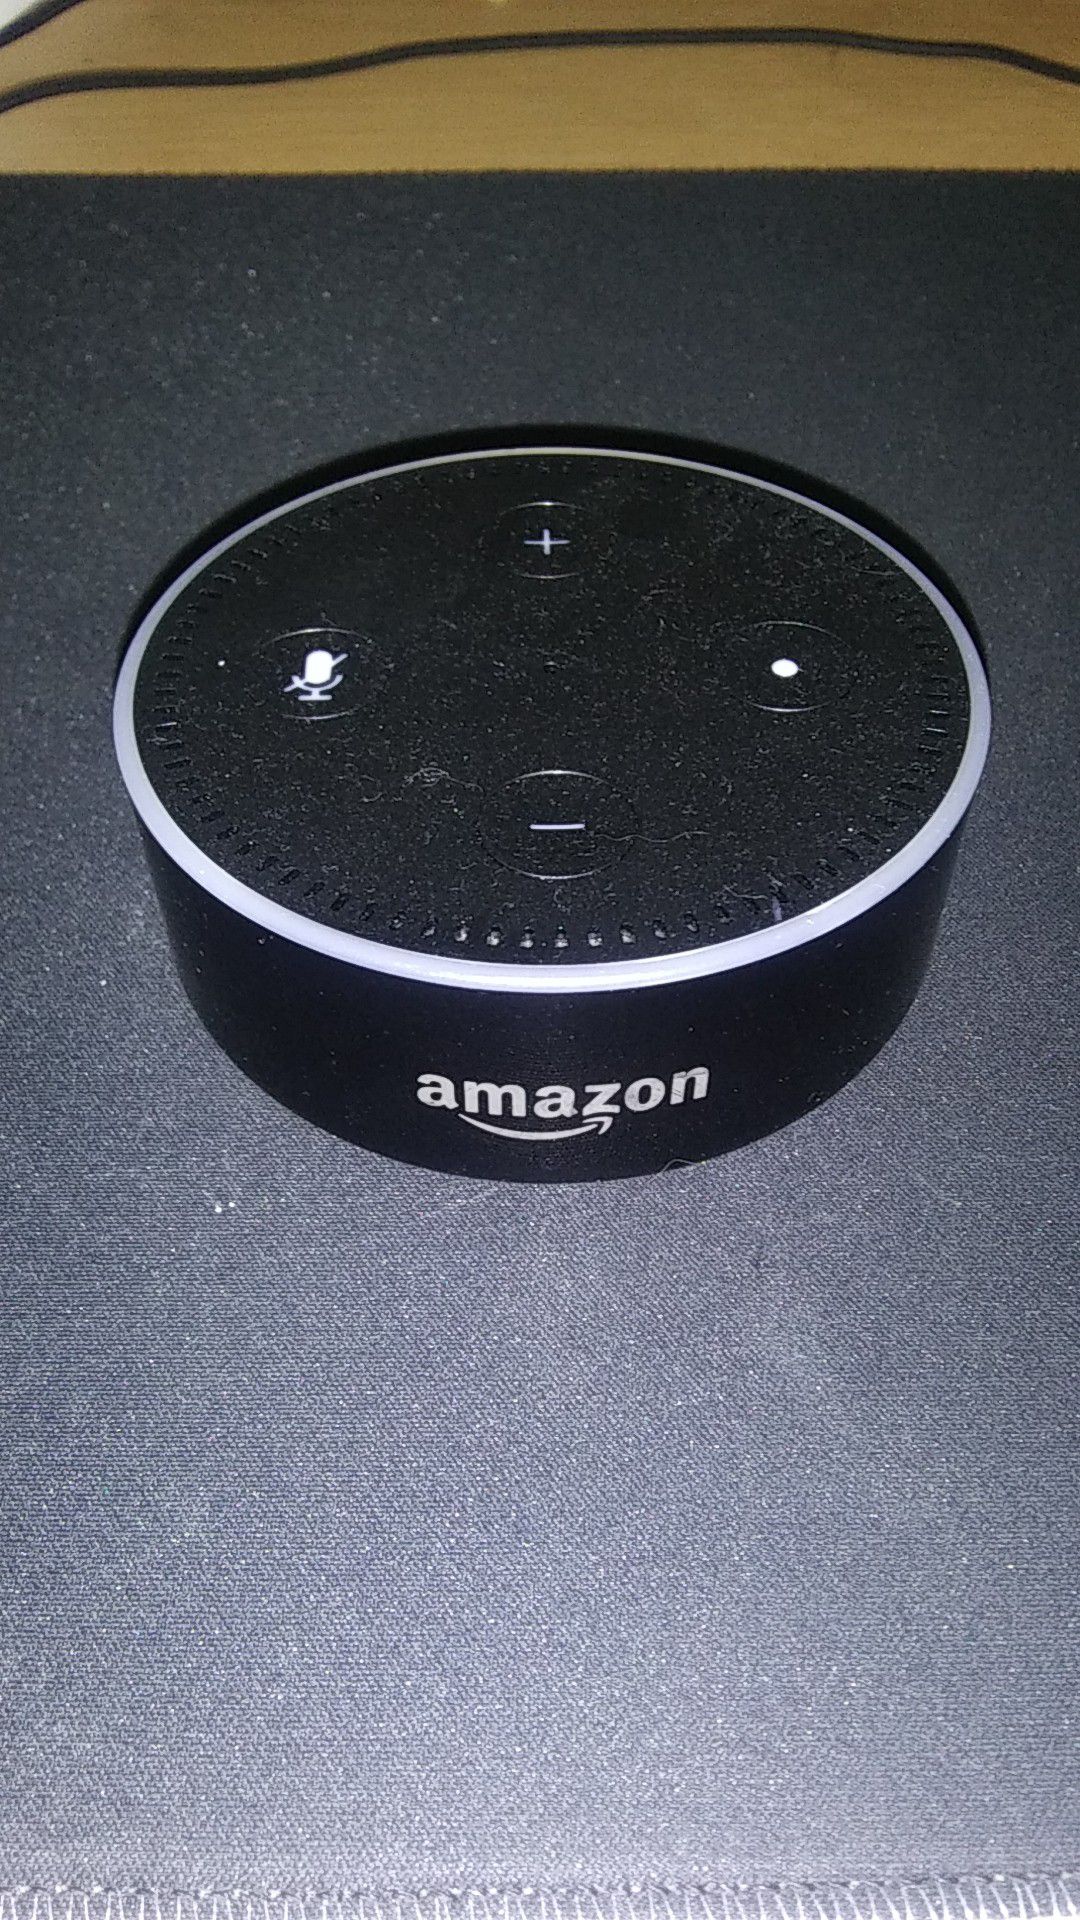 Amazon echo dot (gen 2)